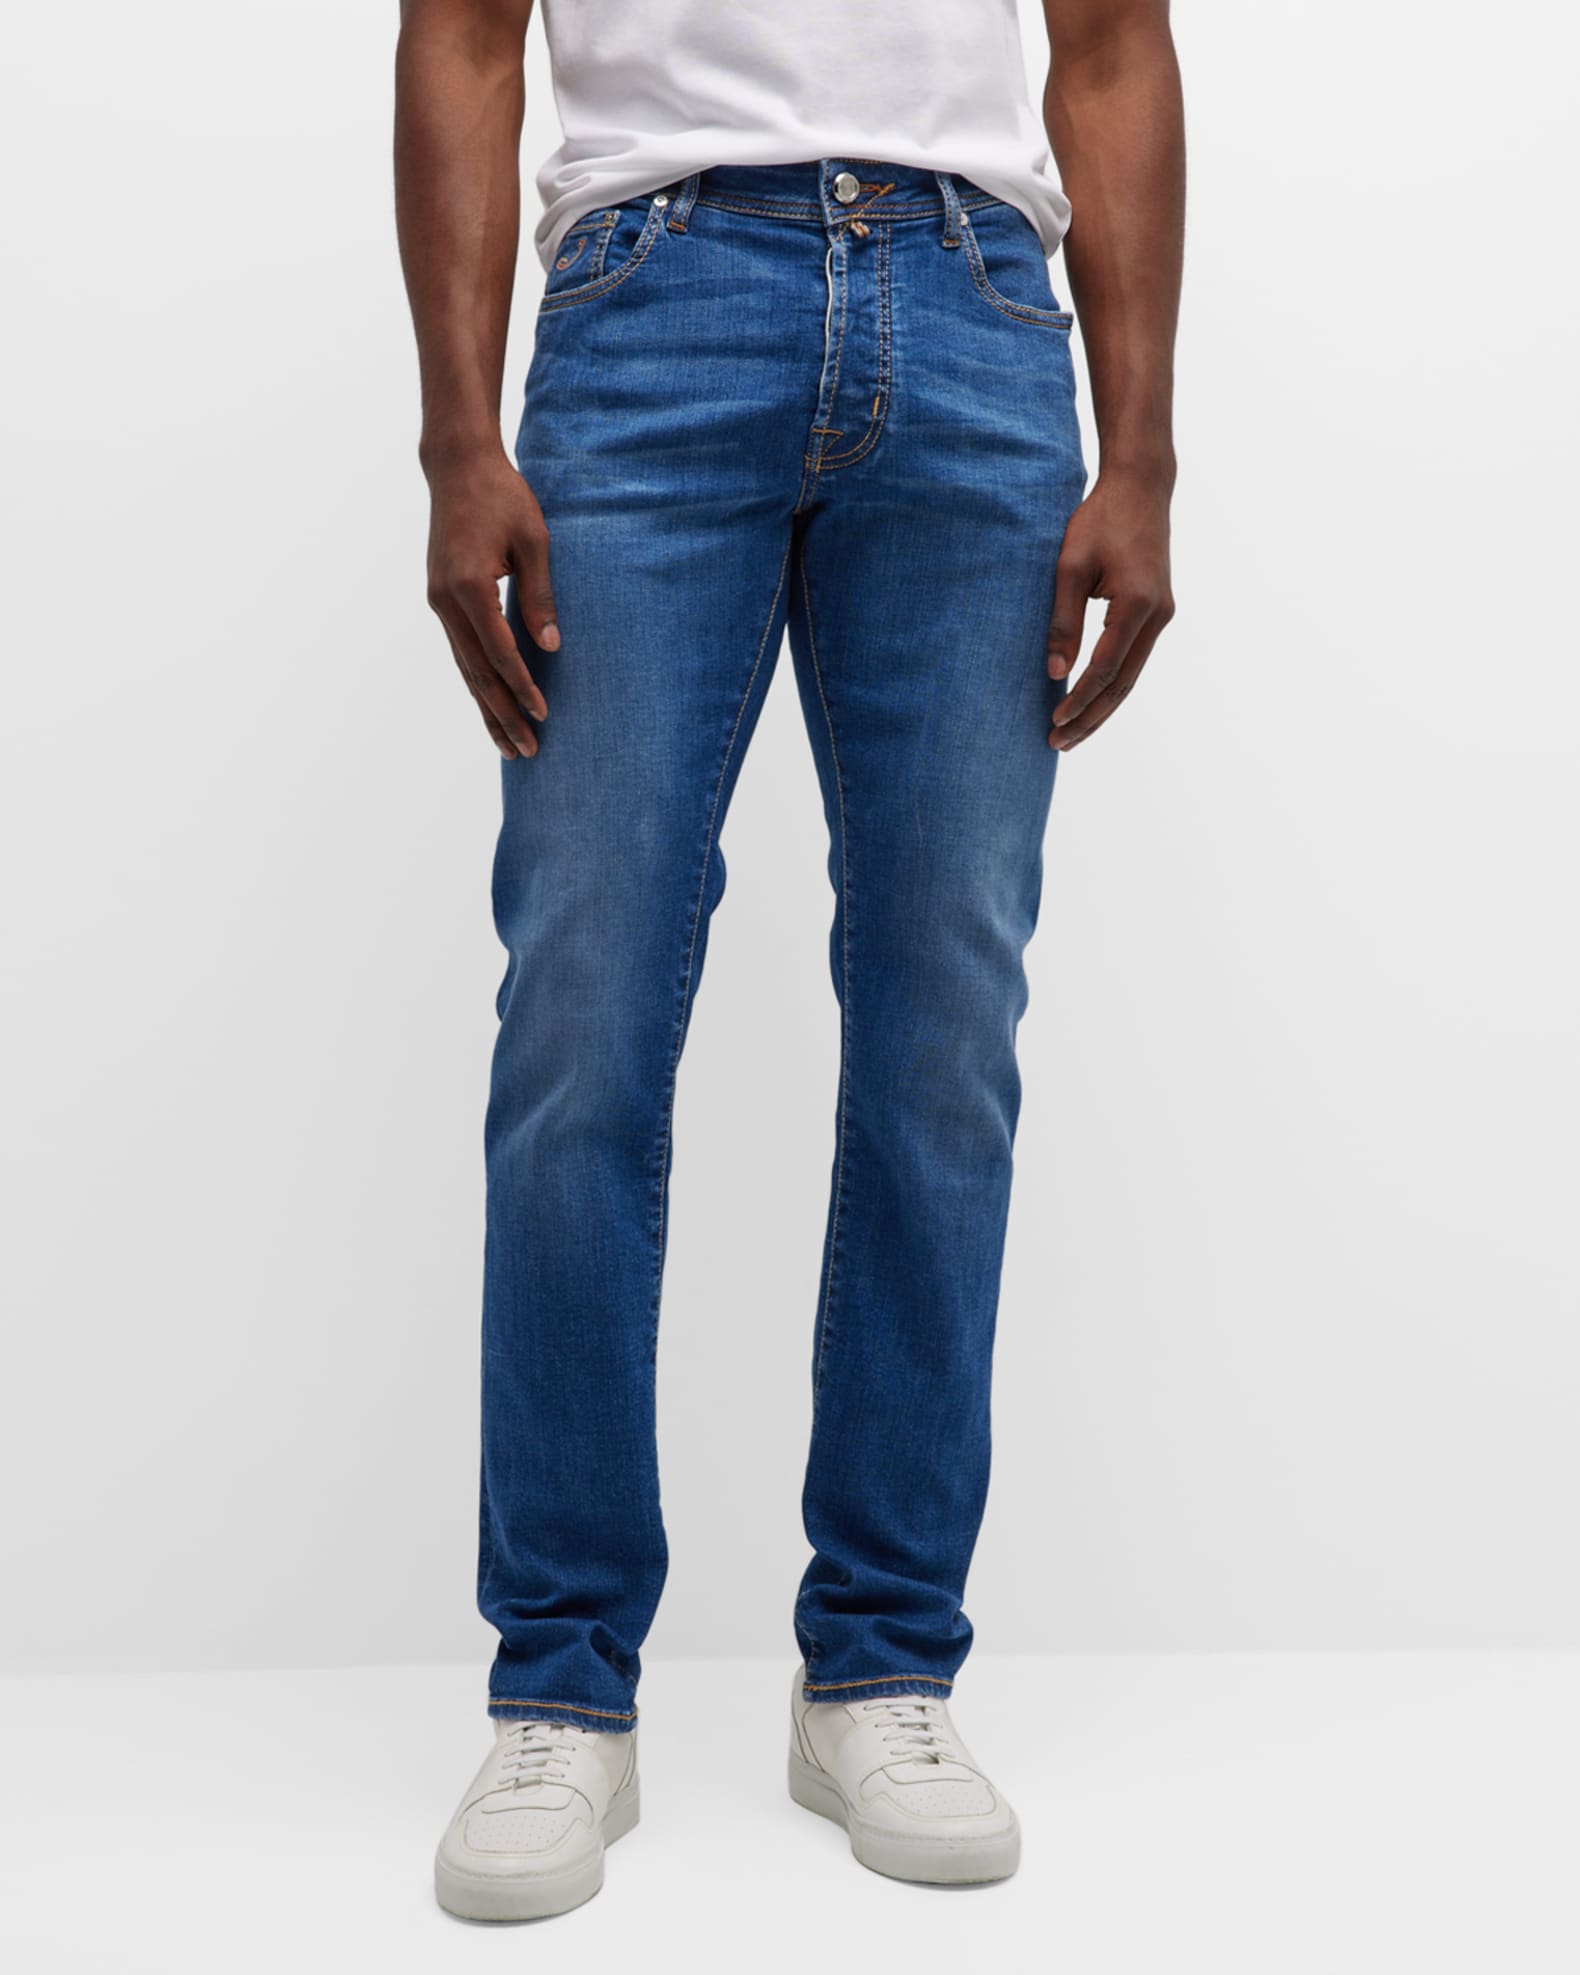 reservering plug Clip vlinder Jacob Cohen Men's Slim Fit Stretch Denim Jeans | Neiman Marcus